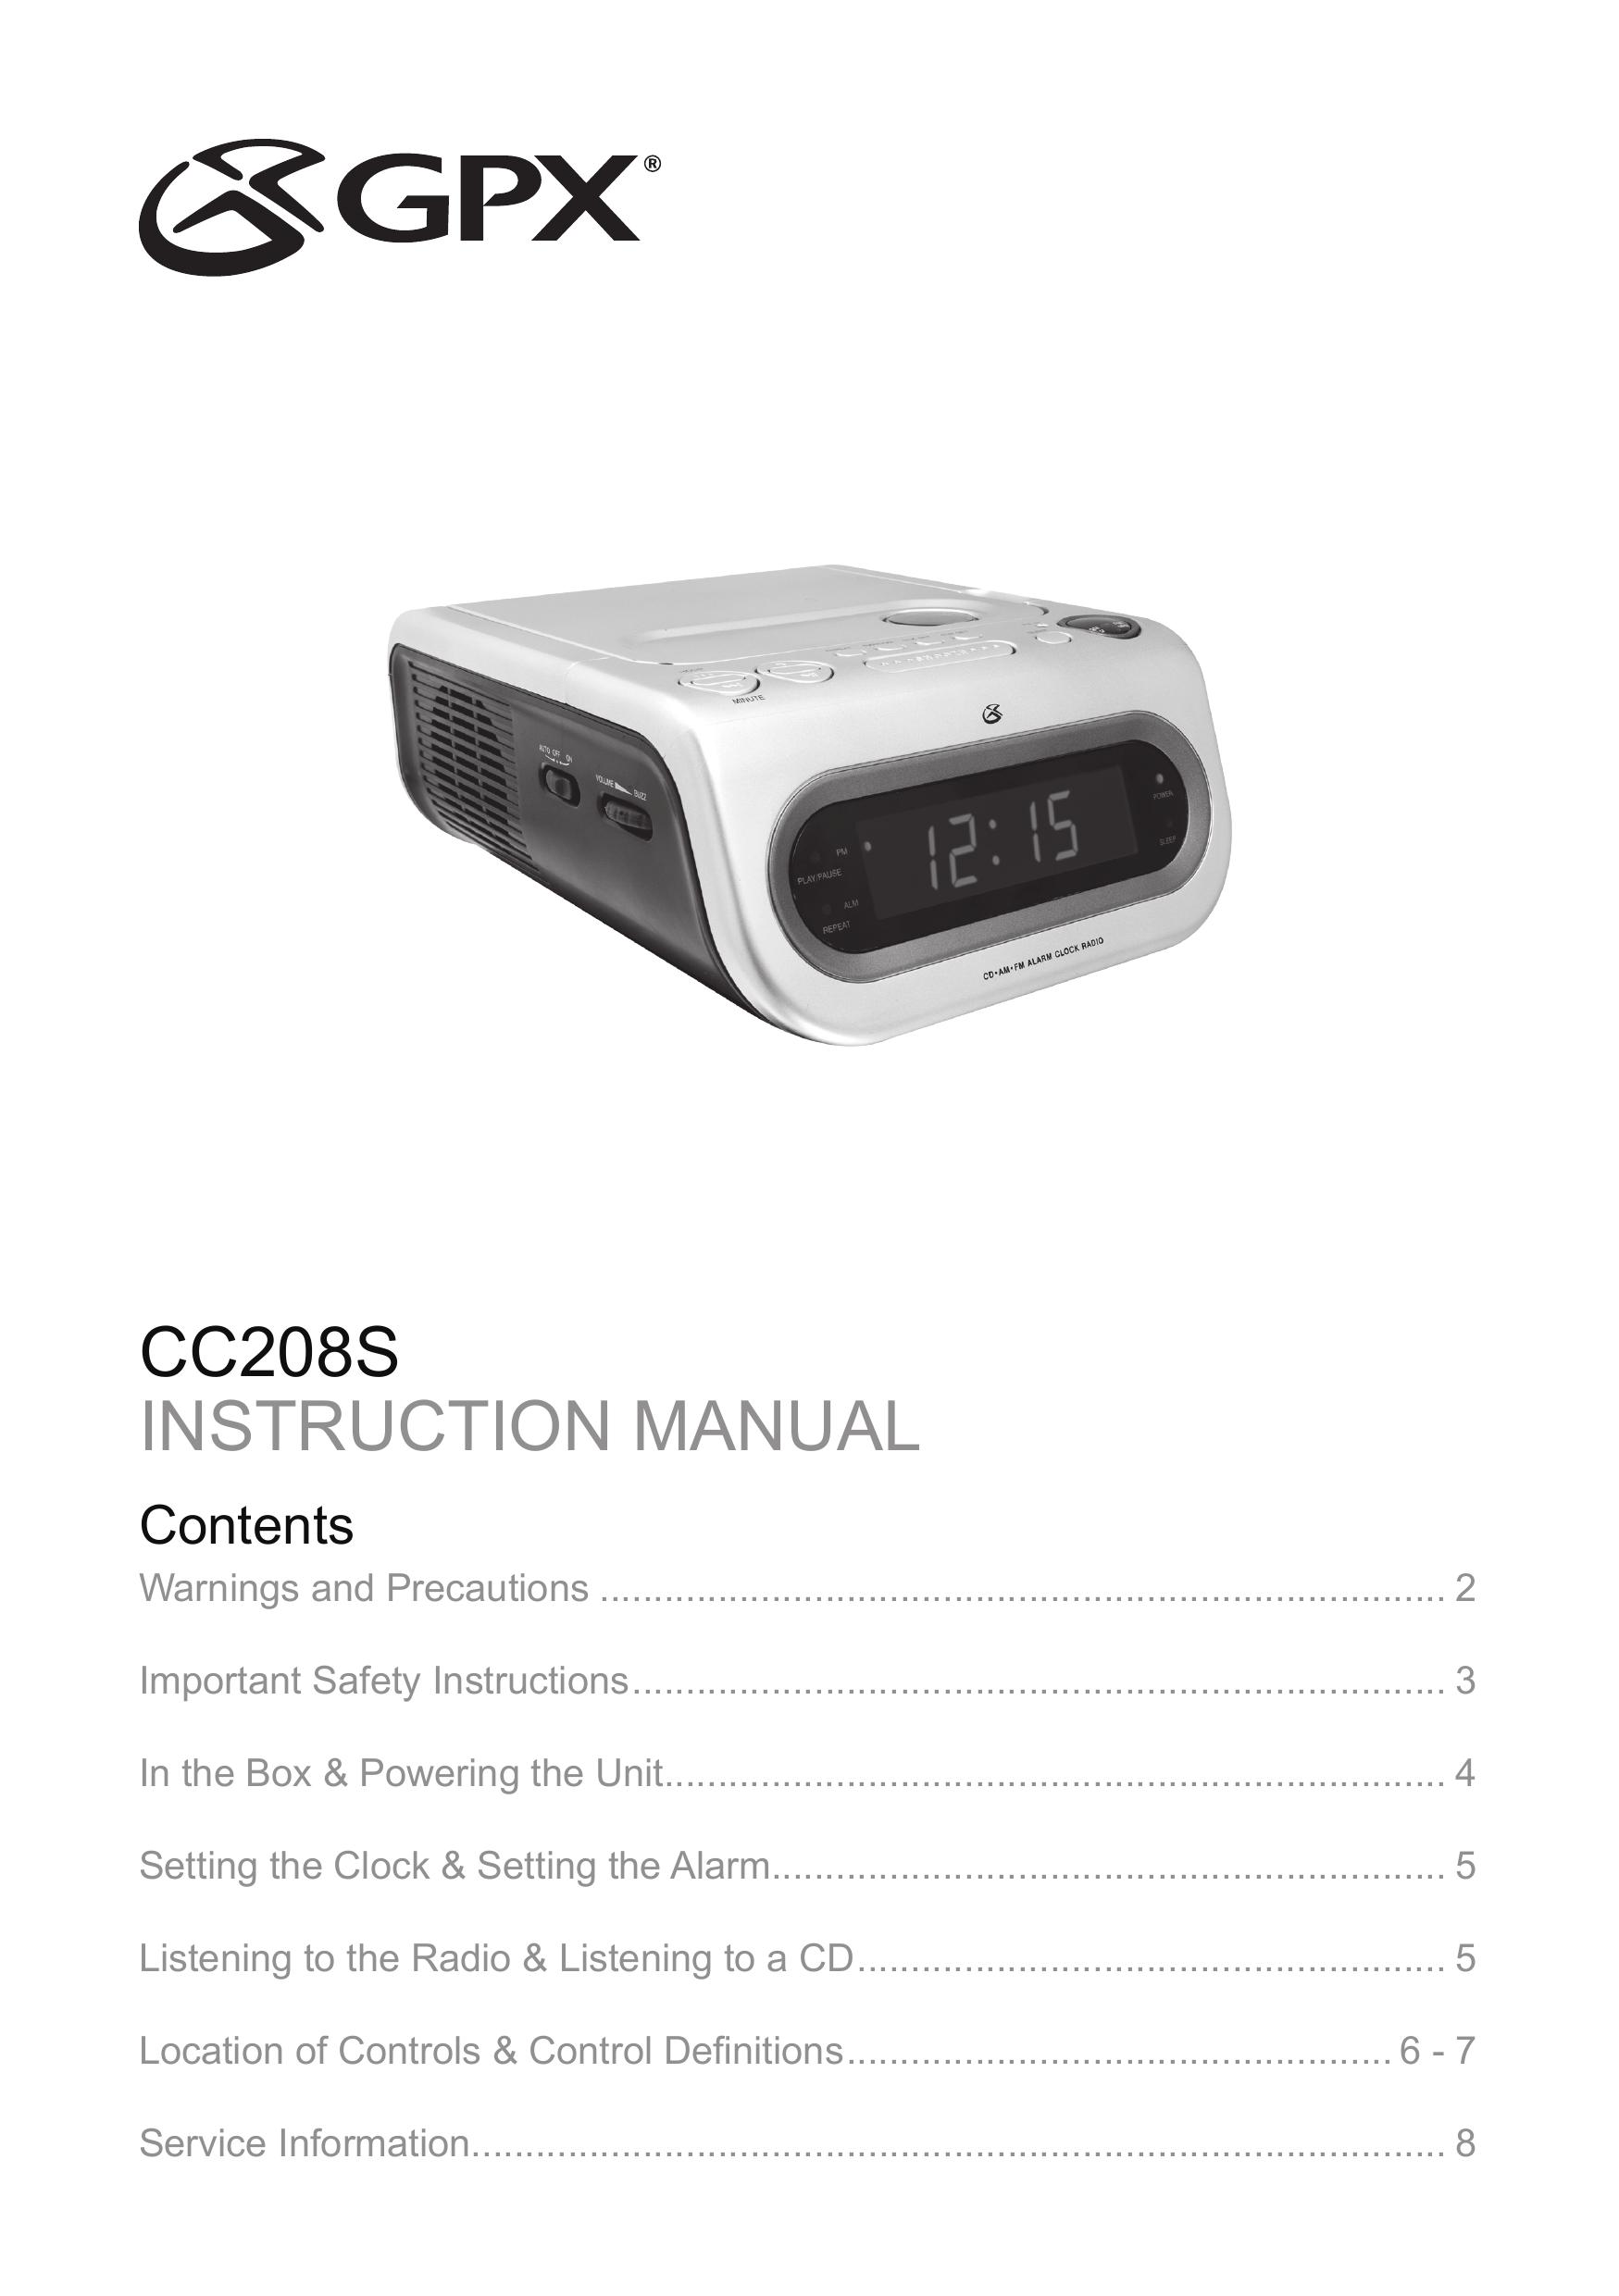 GPX CC208S Clock Radio User Manual